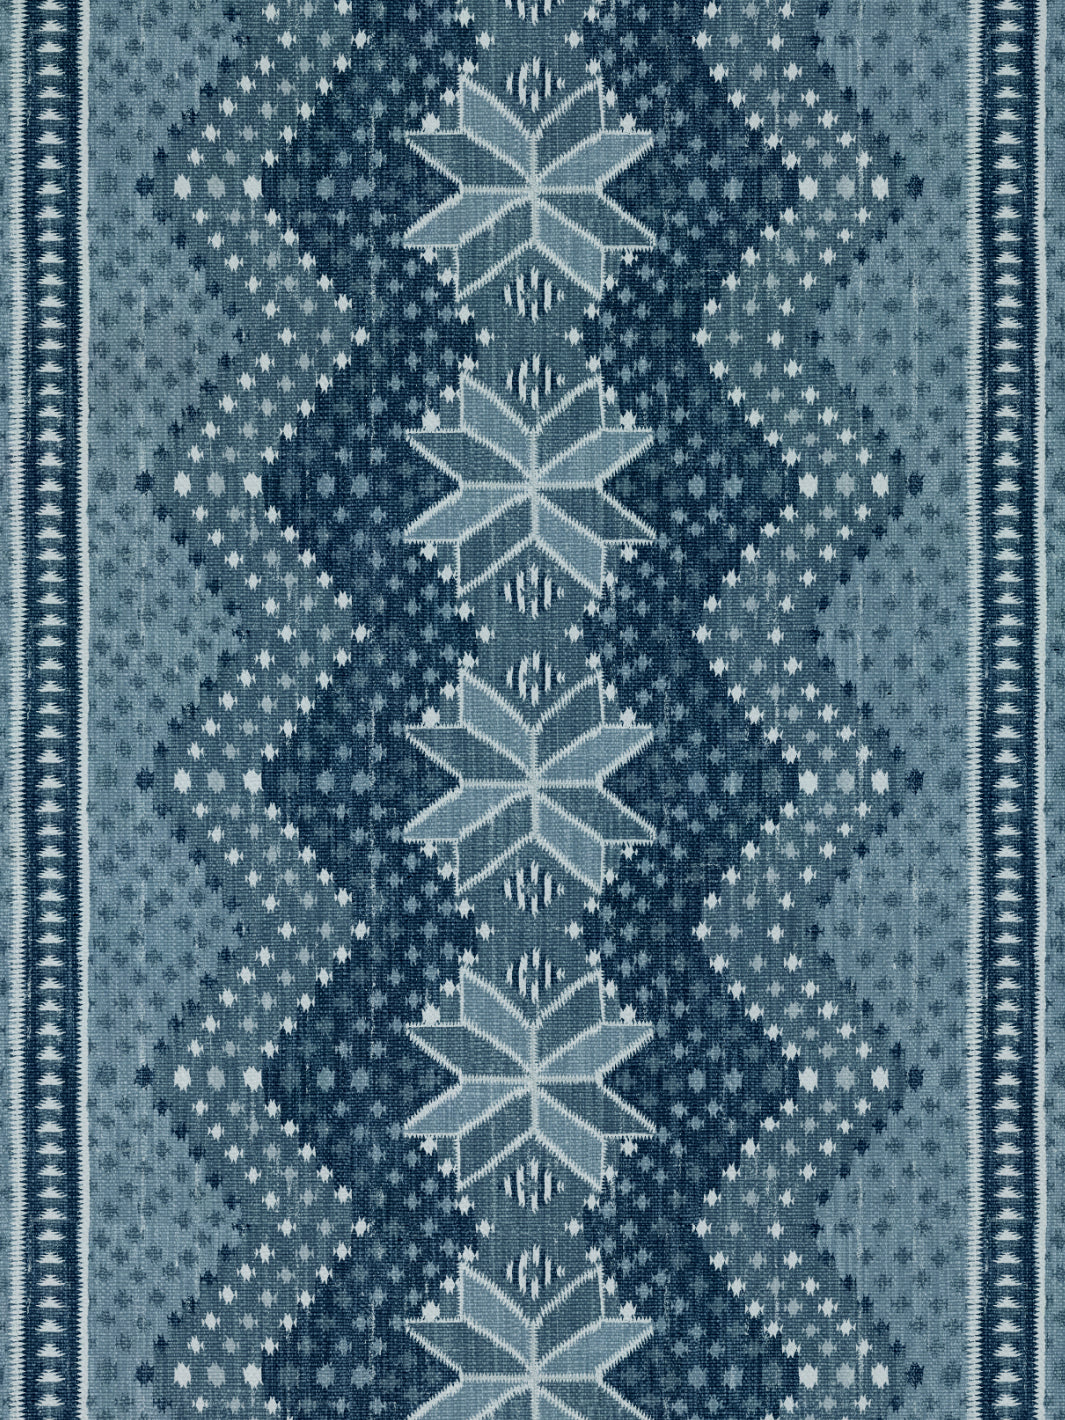 'Northstar Blanket' Linen Fabric by Nathan Turner - Blue